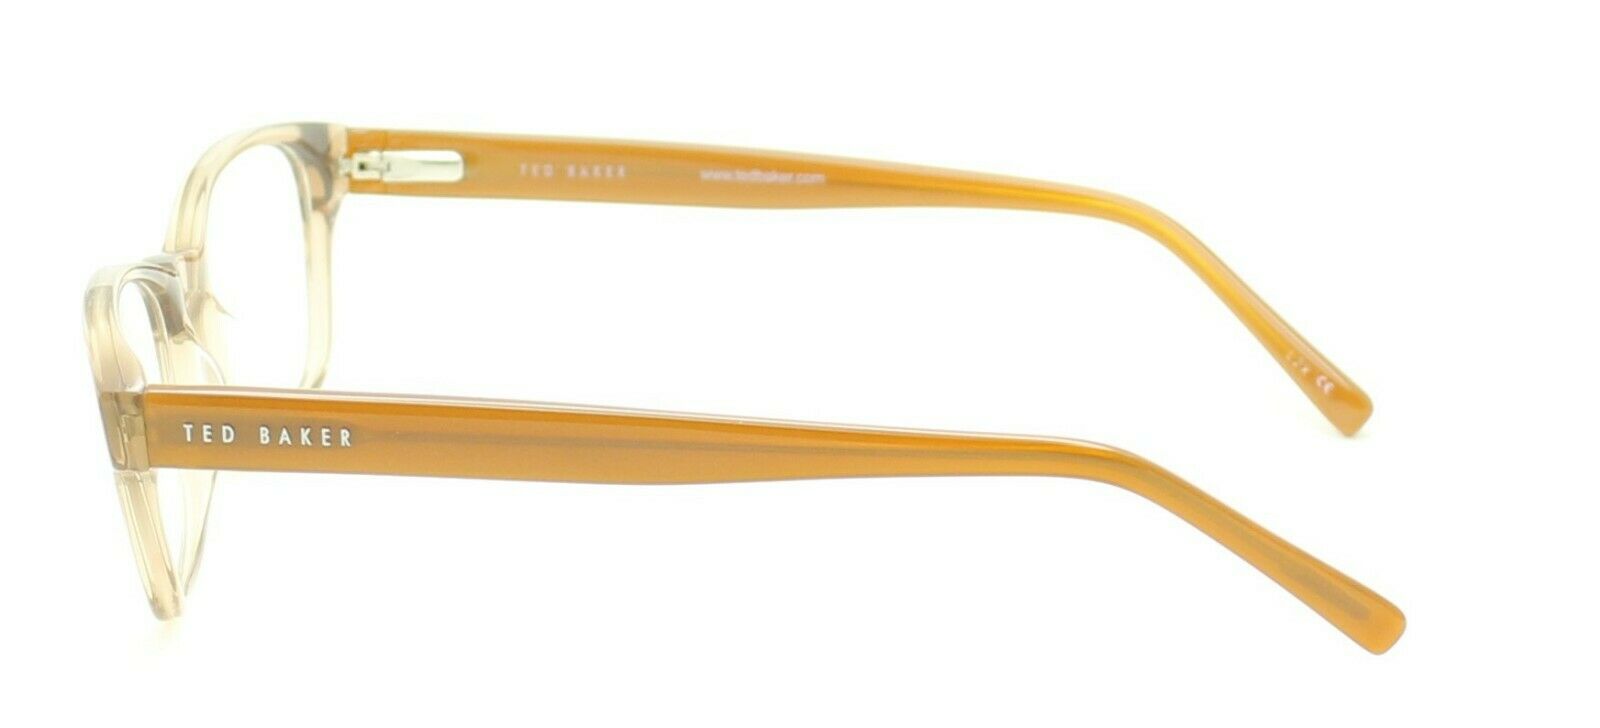 TED BAKER Olivia 9069 113 51mm Eyewear FRAMES Glasses Eyeglasses RX Optical -New